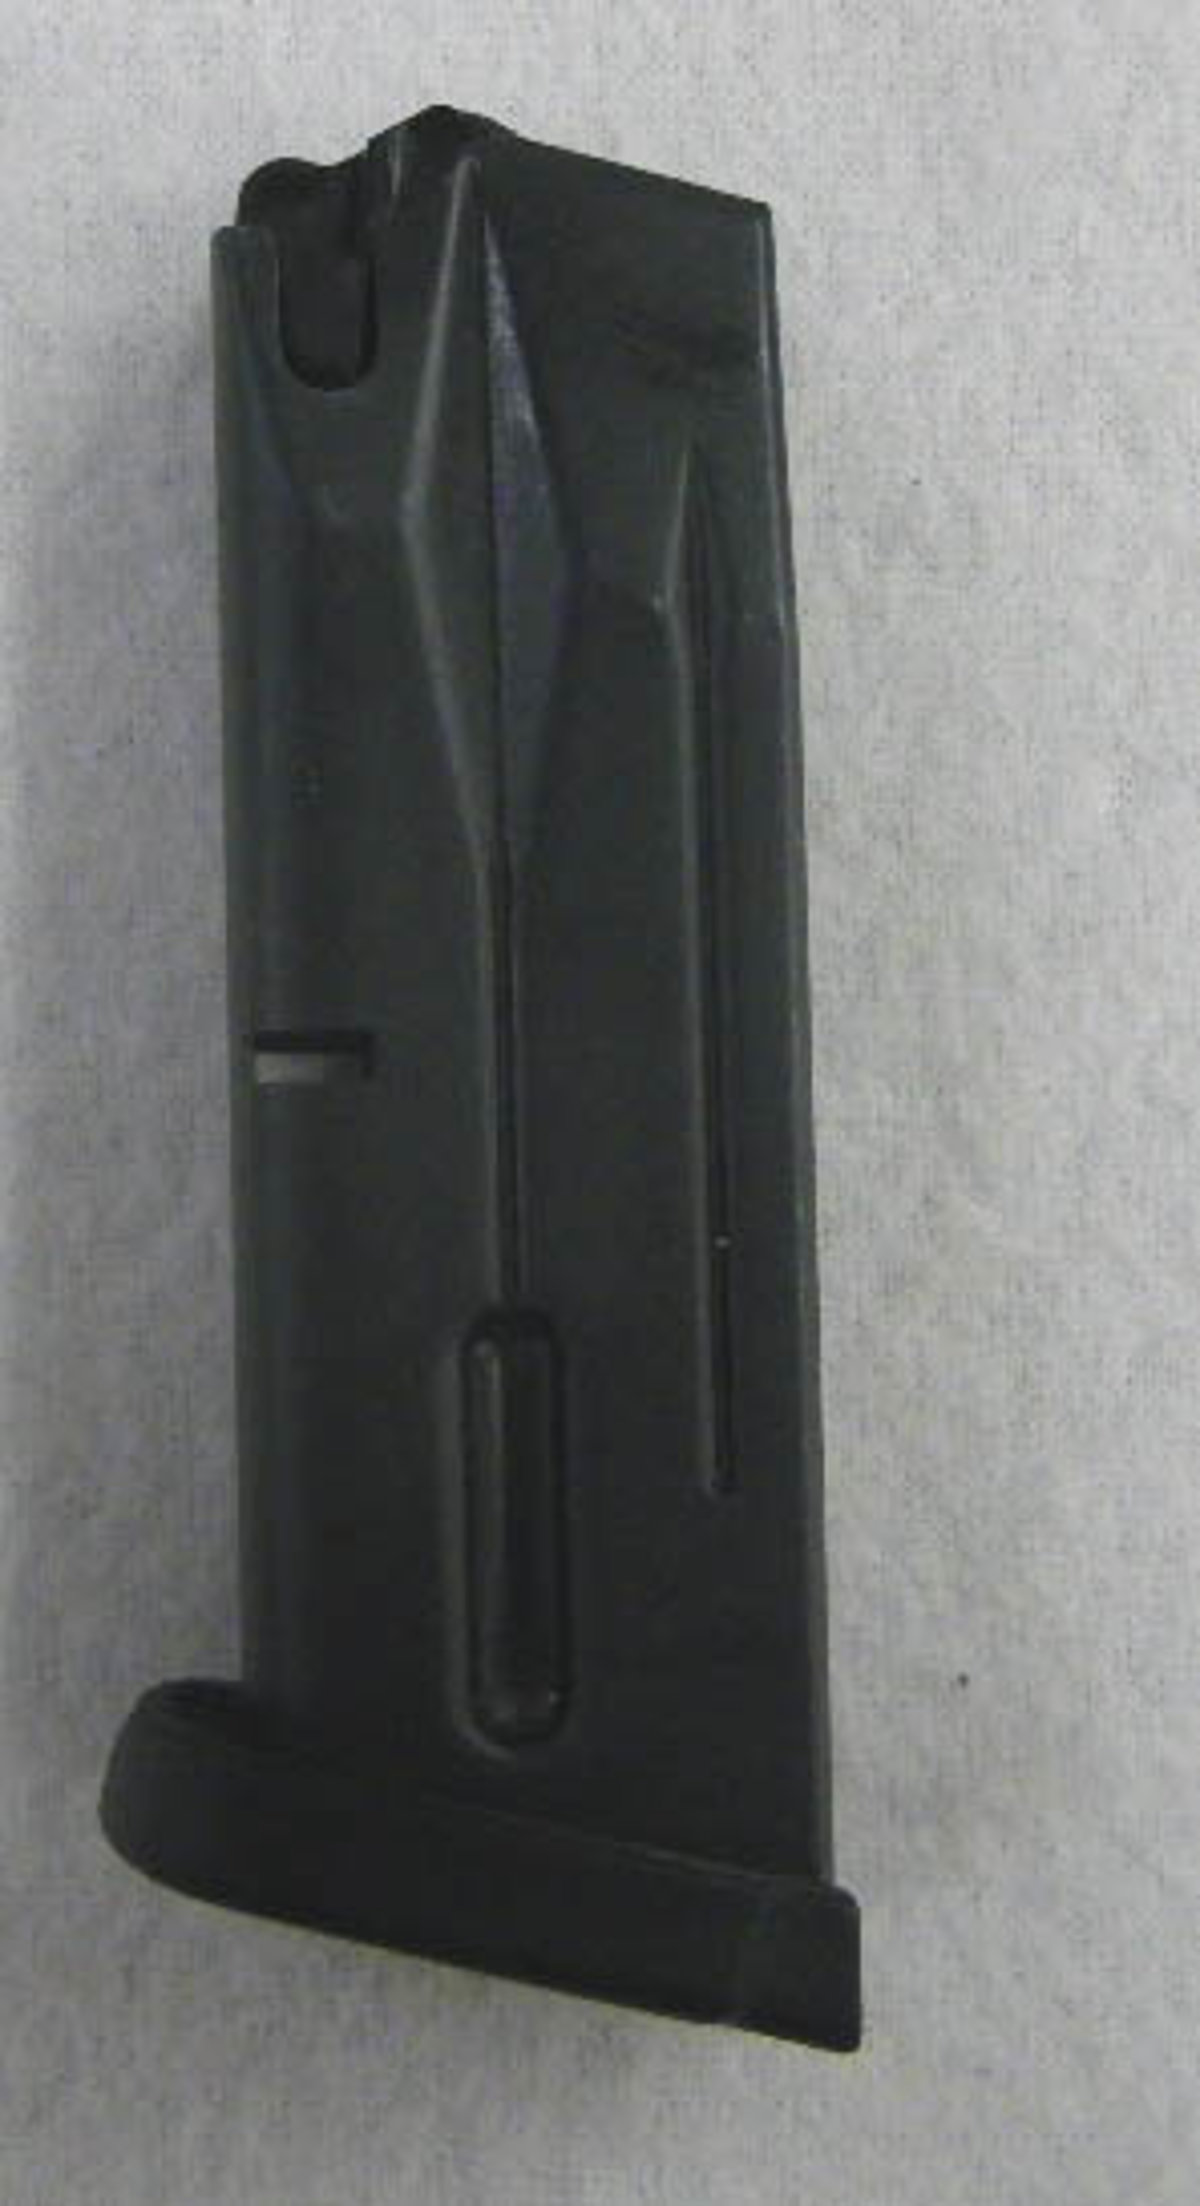 Magazin Beretta 9000 S 9mm Luger